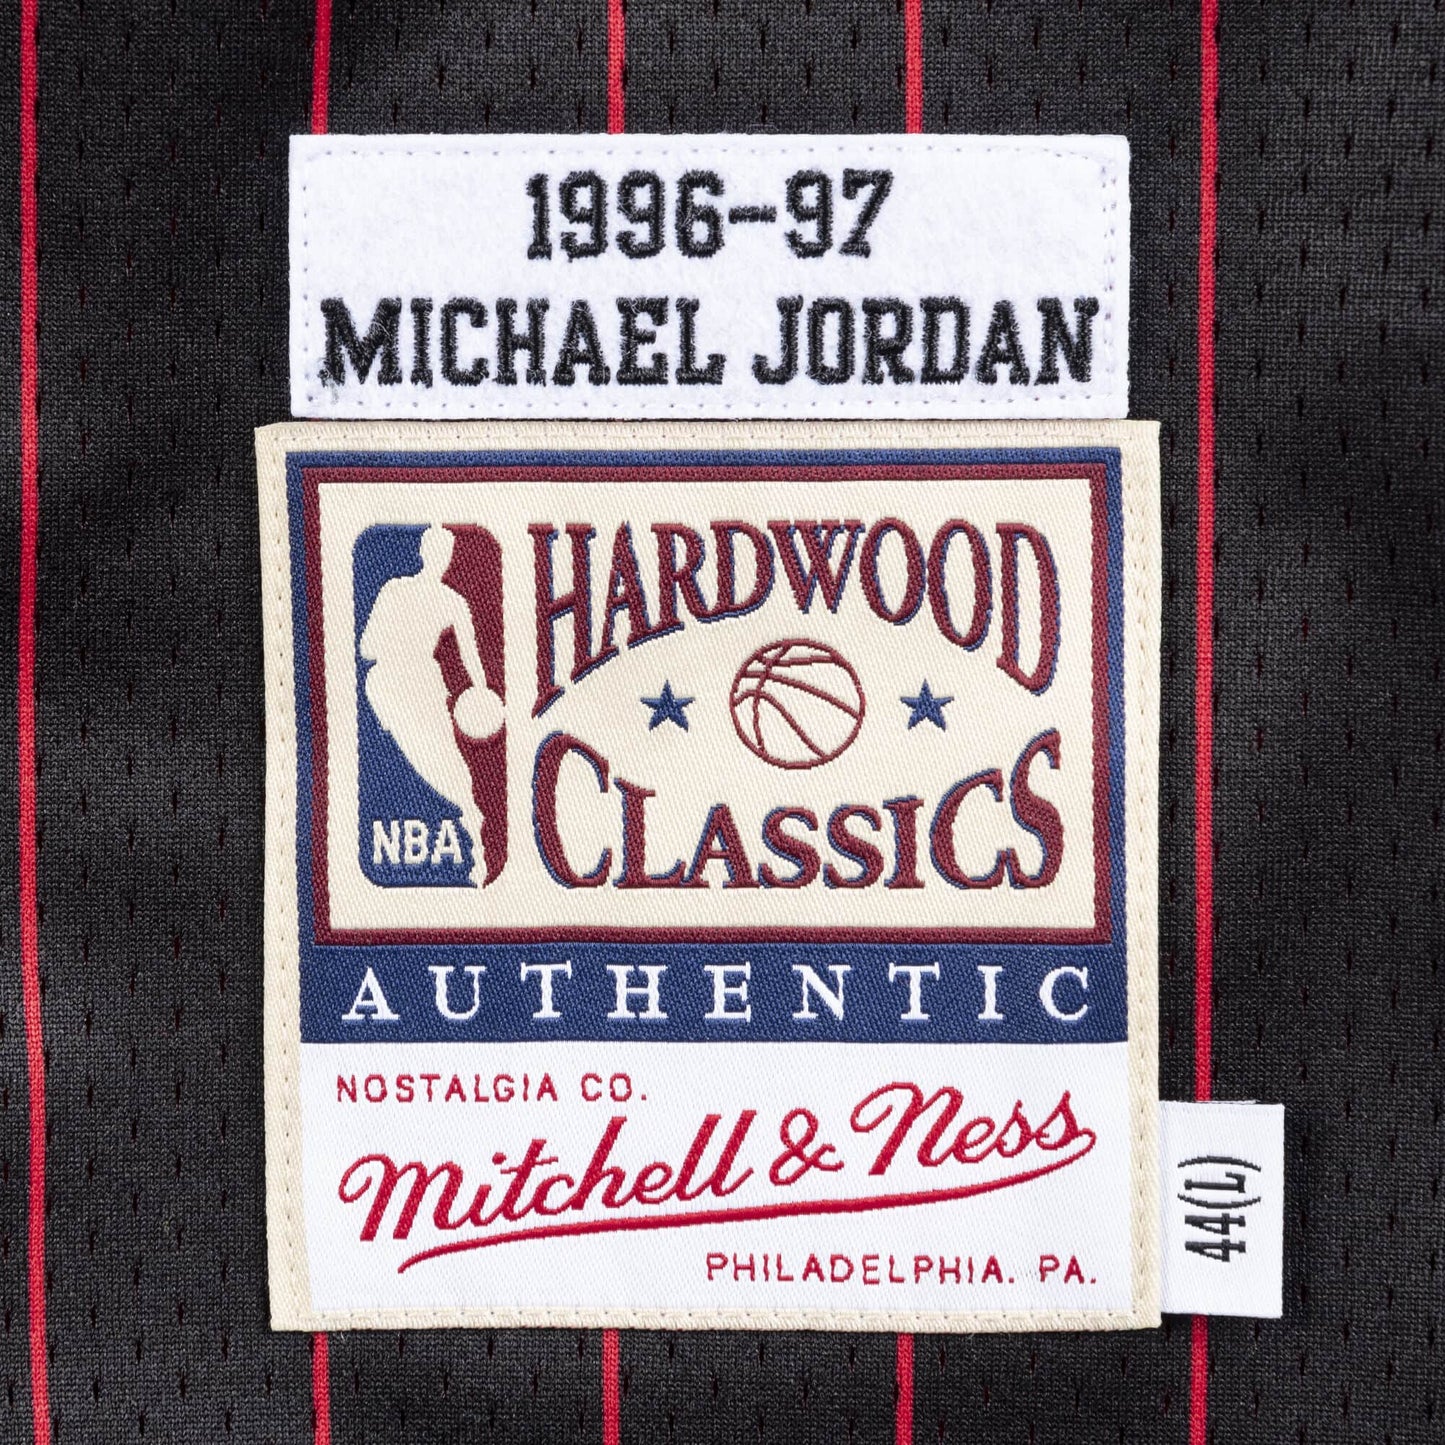 Authentic Jersey Chicago Bulls Alternate 1996-97 Michael Jordan